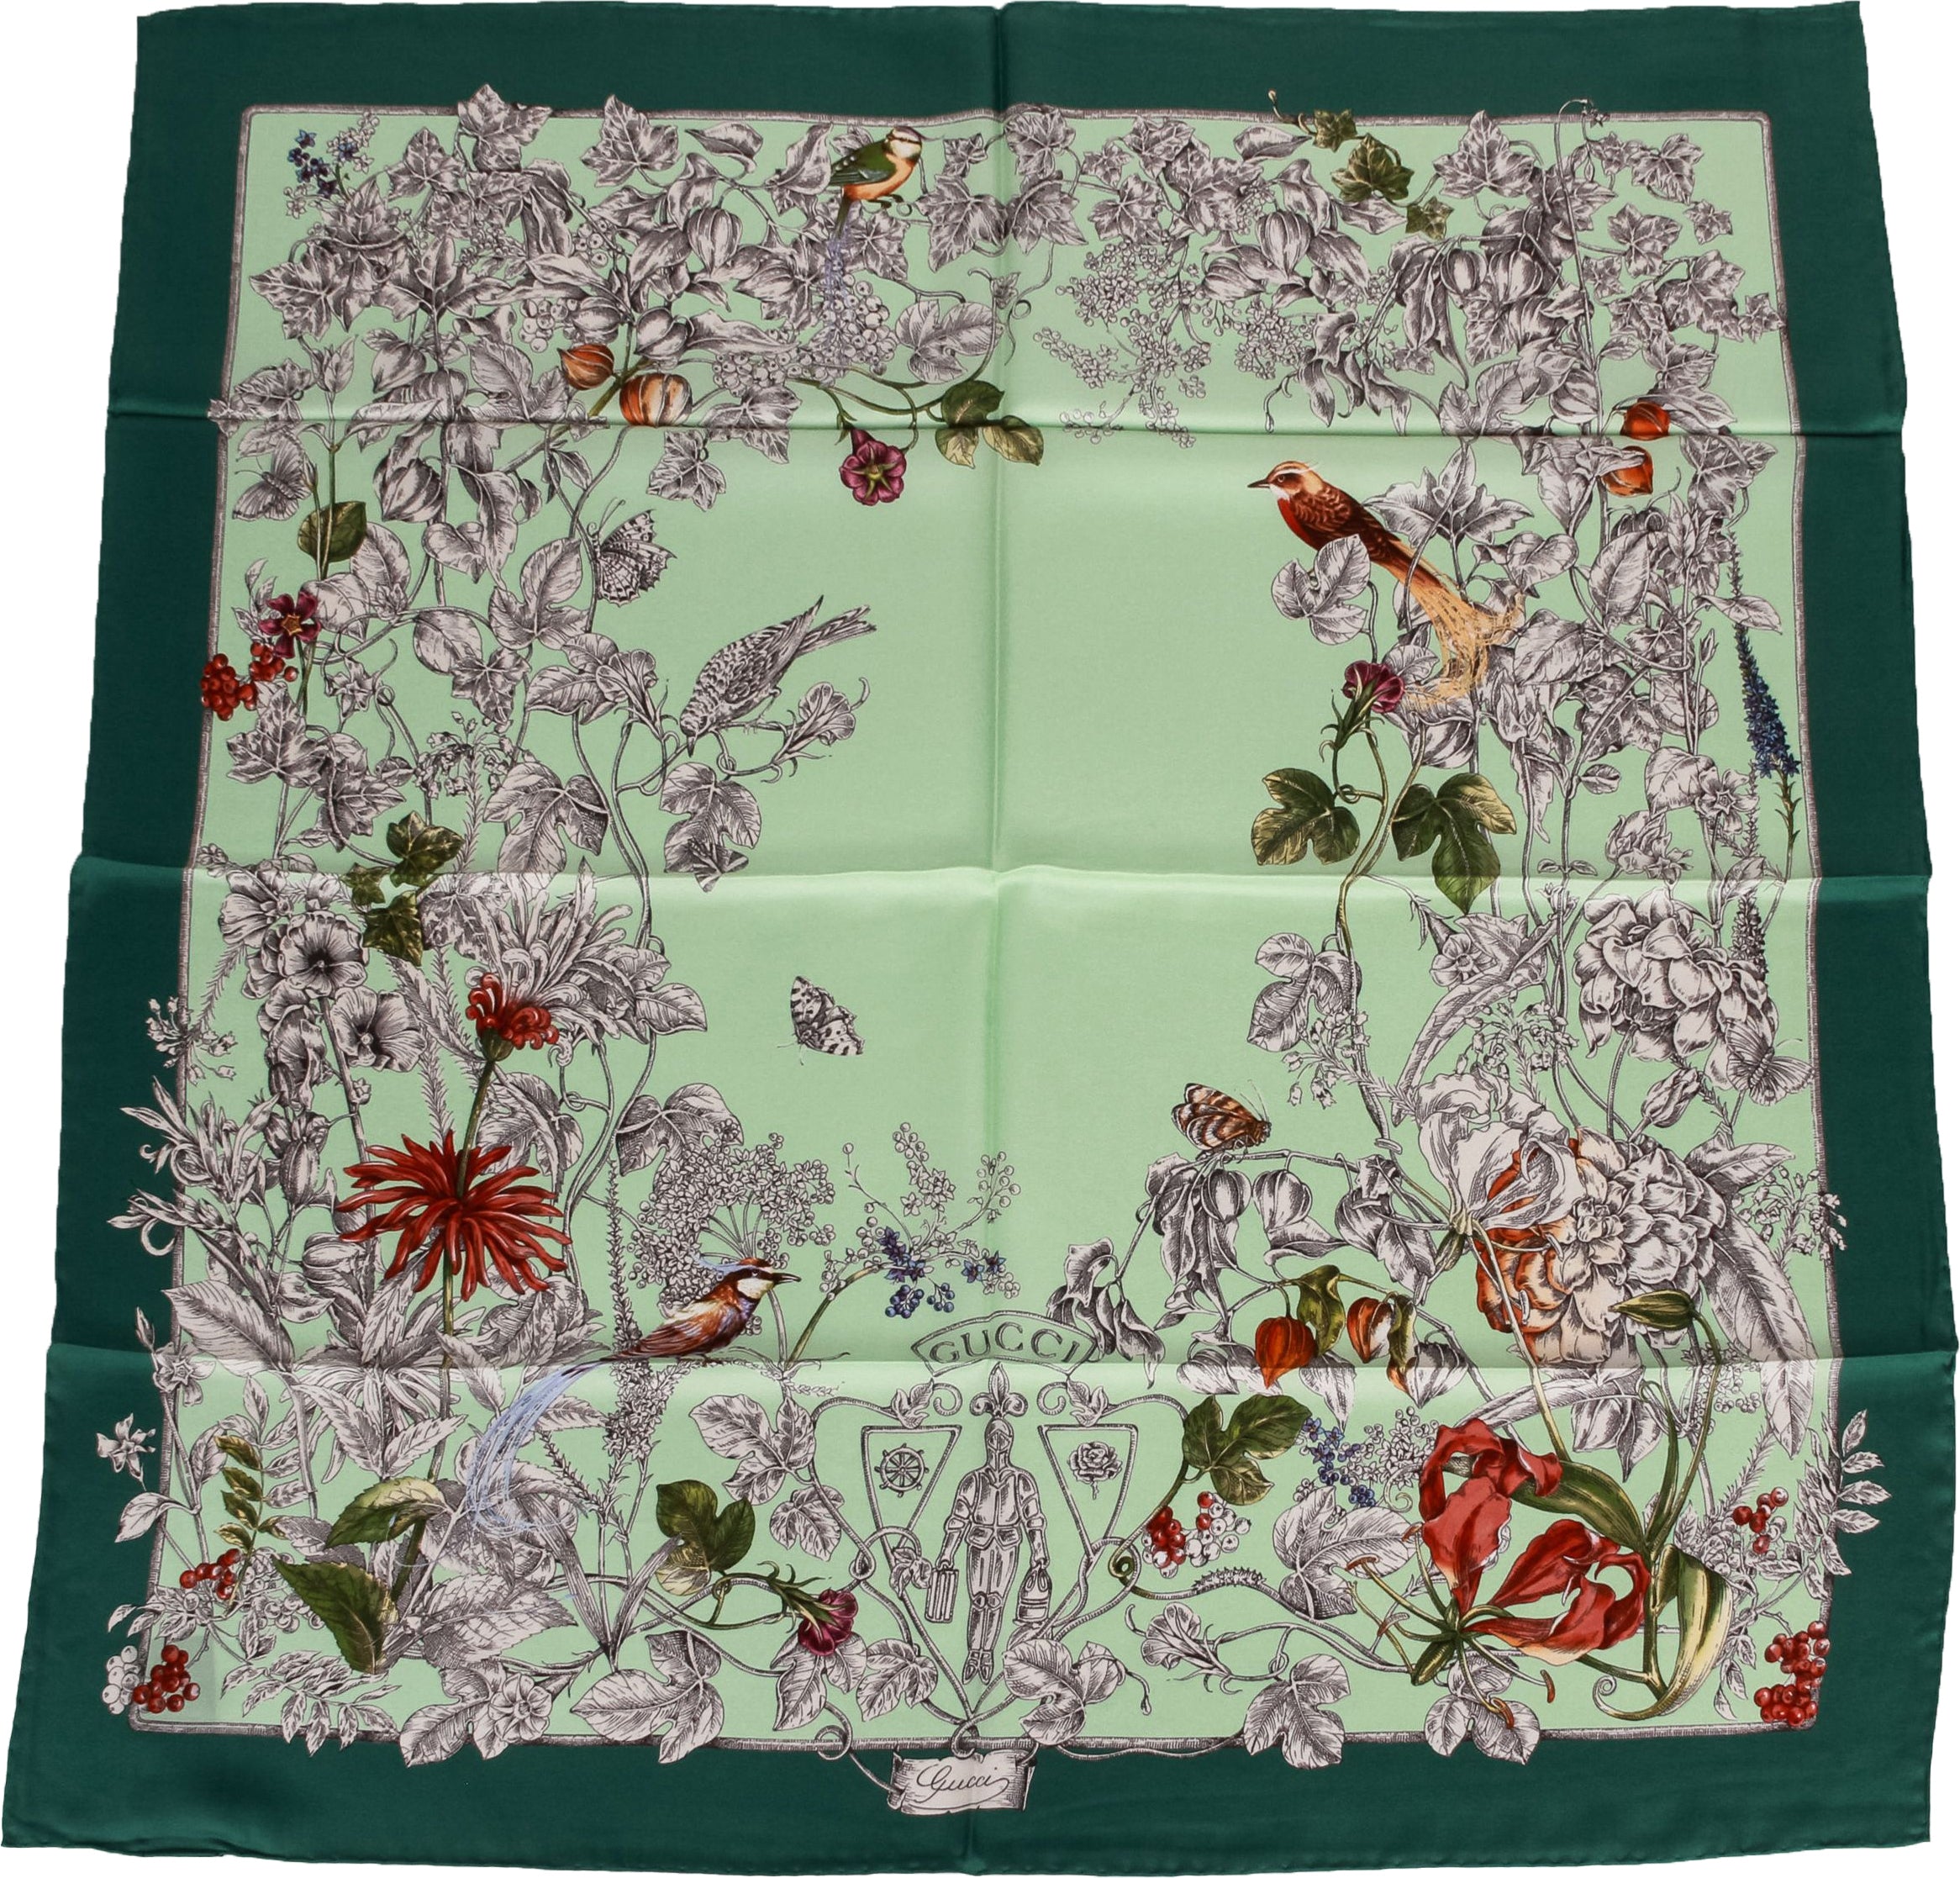 Gucci Interlocking G floral print silk pocket square - ShopStyle Scarves